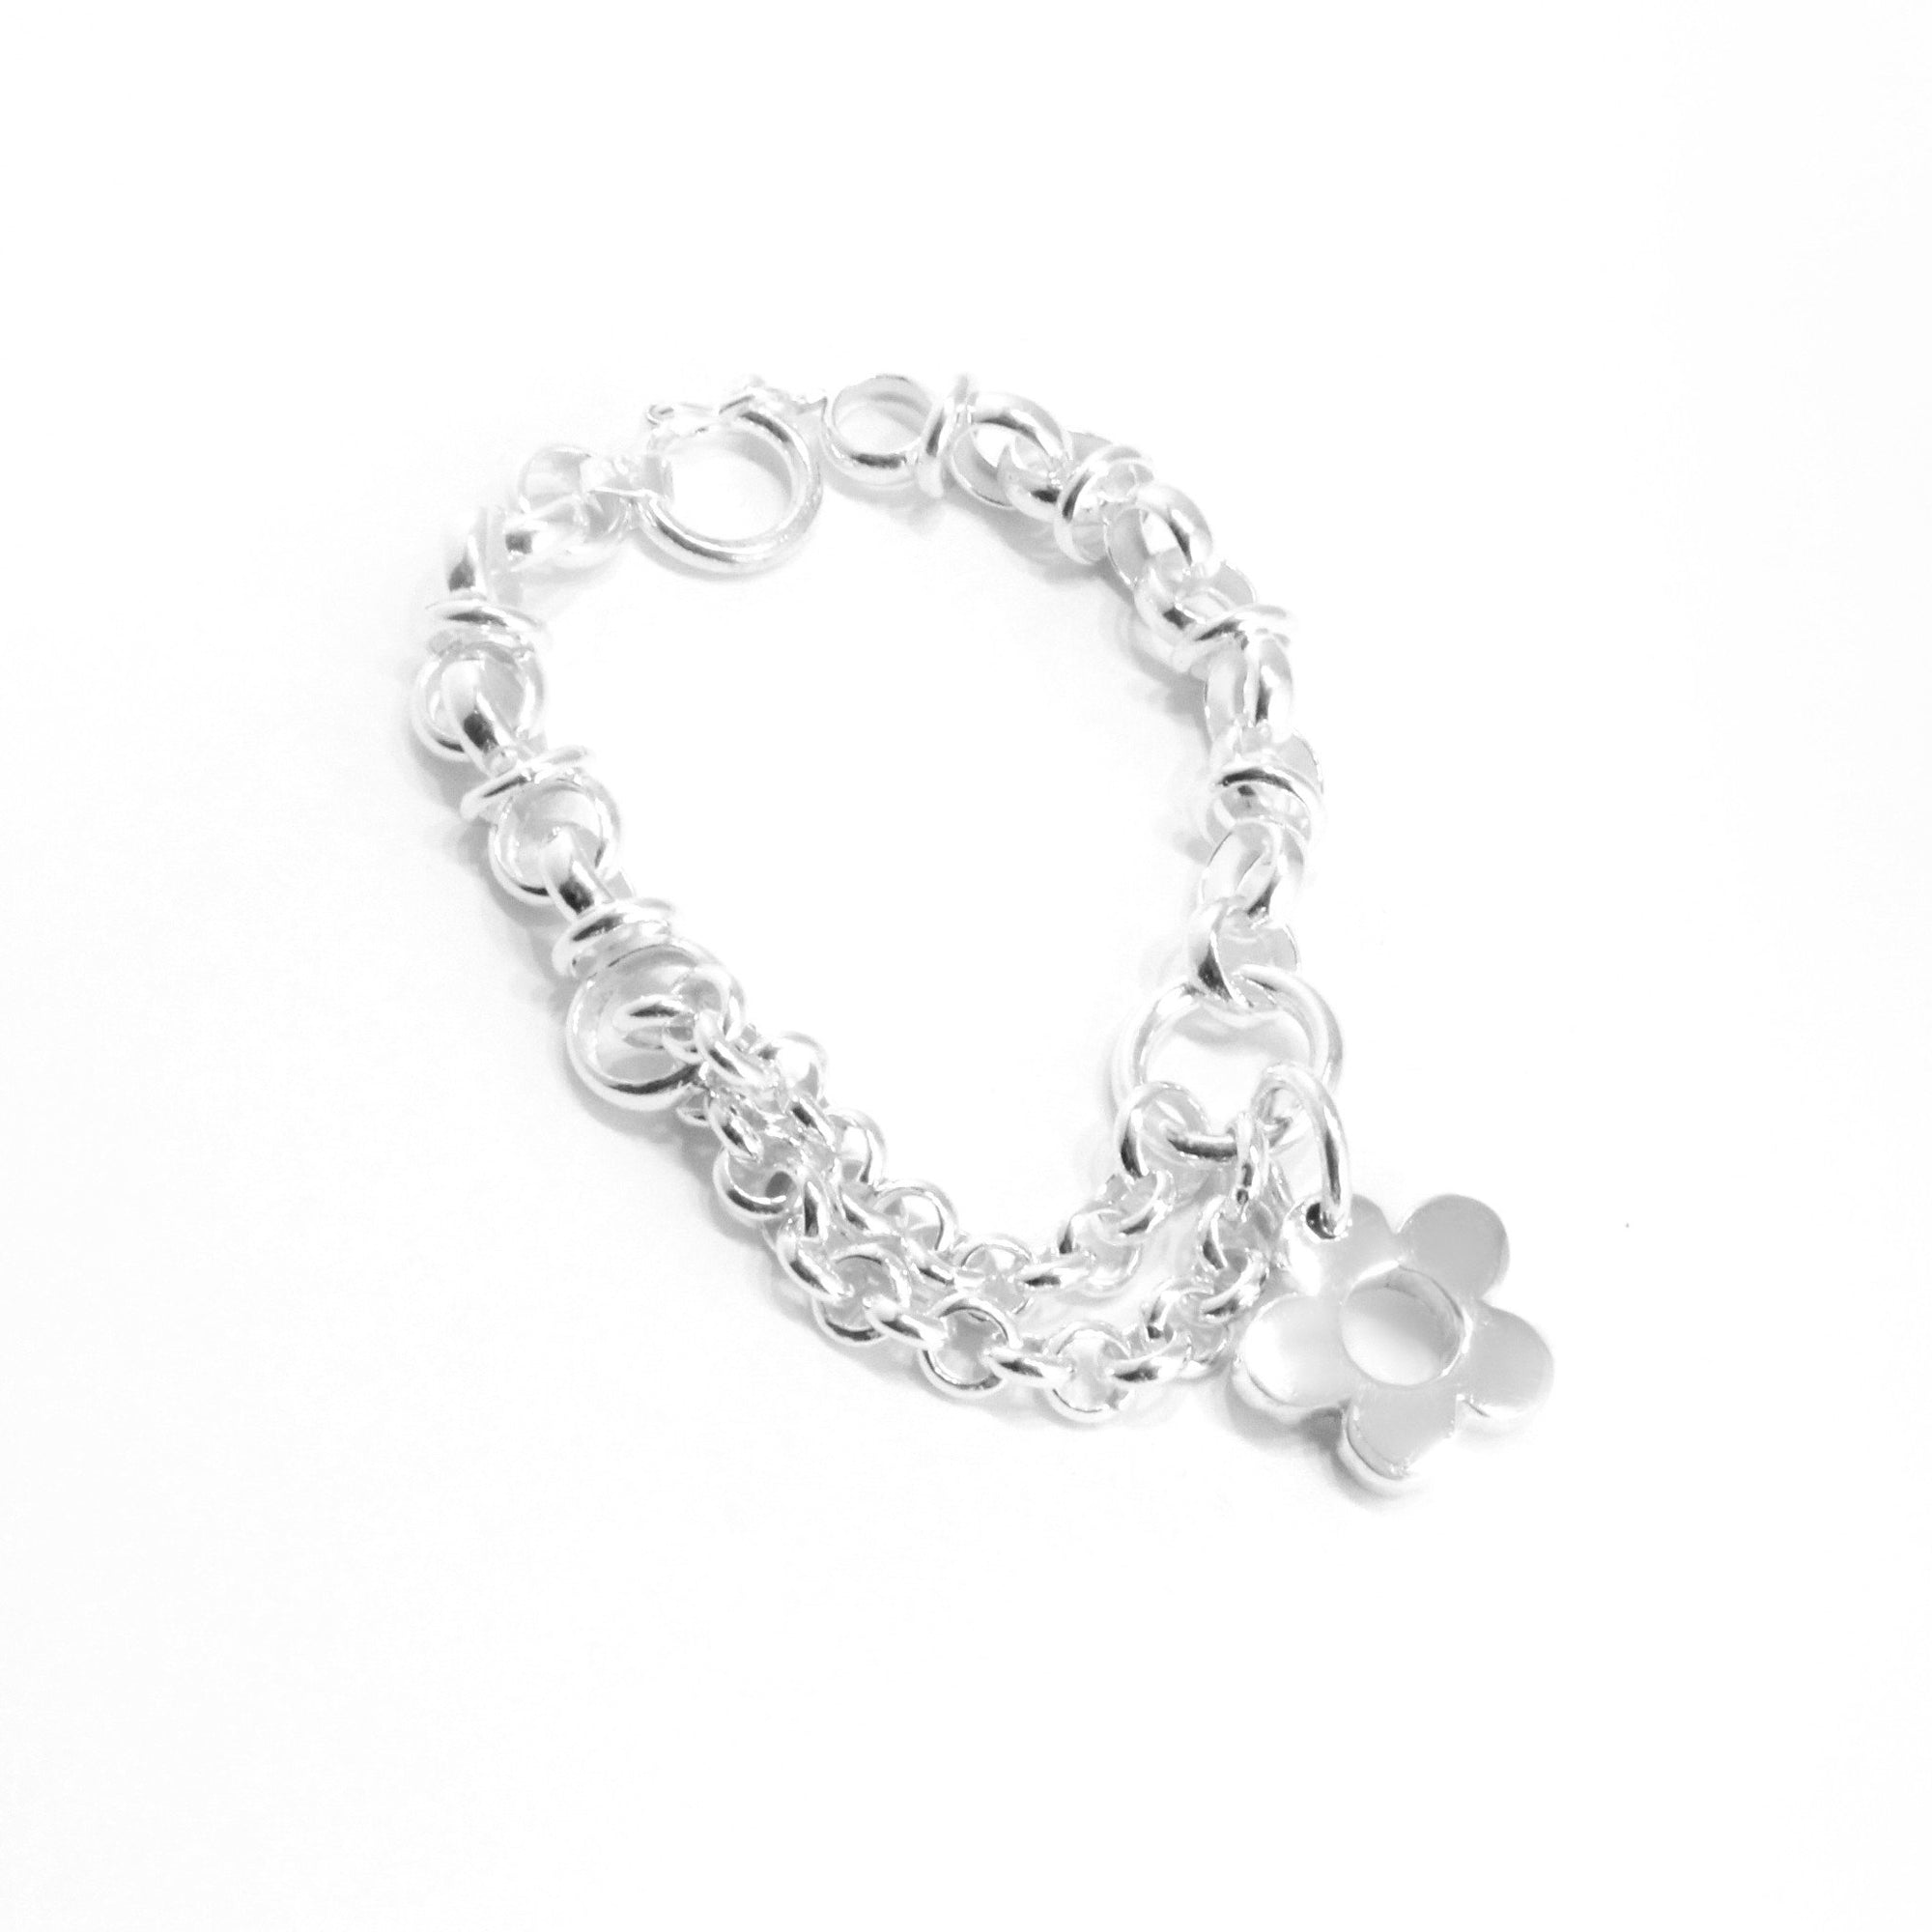 Flower Charm Sterling Silver Bracelet - Qinti - The Peruvian Shop